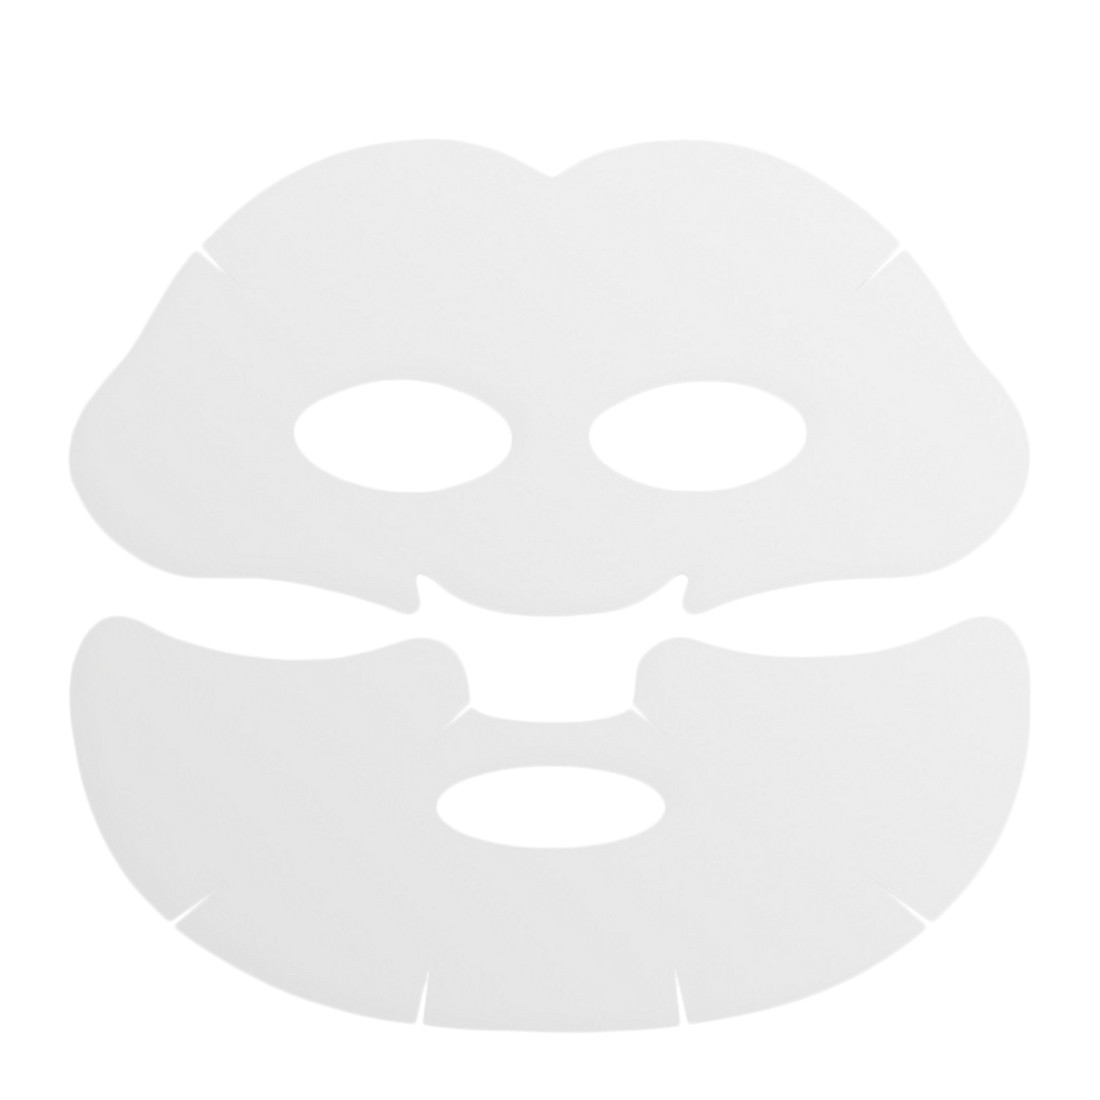 Антивікова тканинна маска Perricone MD Cold Plasma + Concentrated Treatment Sheet Mask